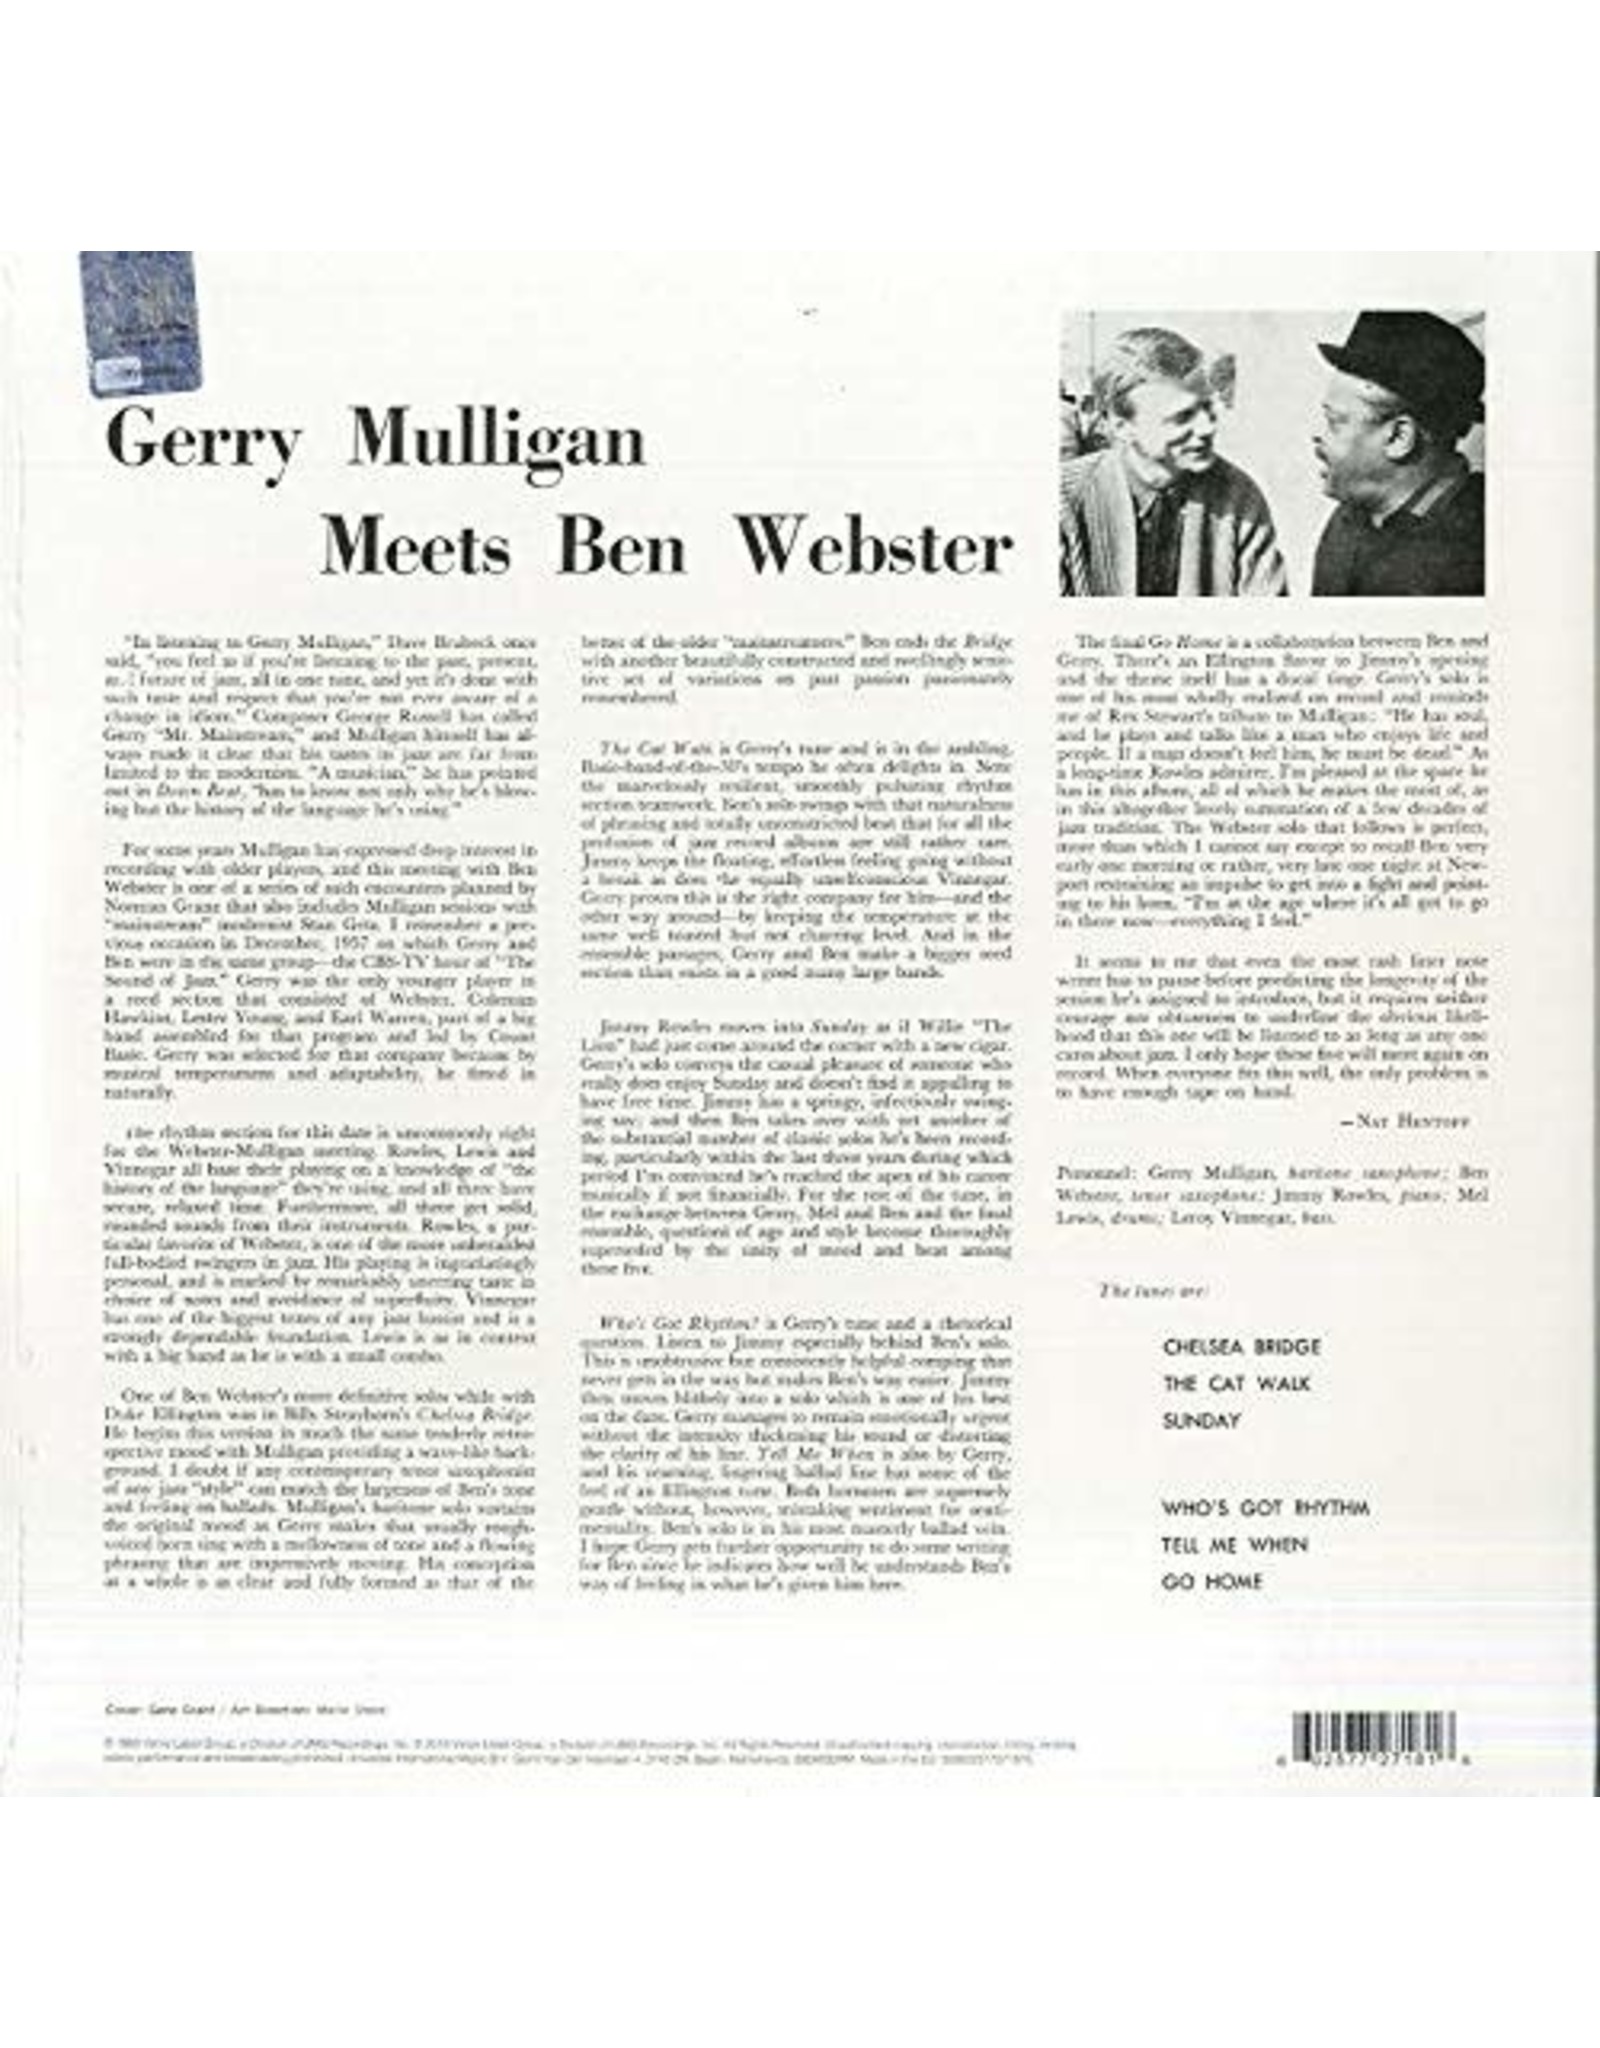 Pop　(Vinyl)　Gerry　Webster　Ben　Meets　Mulligan　Mulligan　Gerry　Music